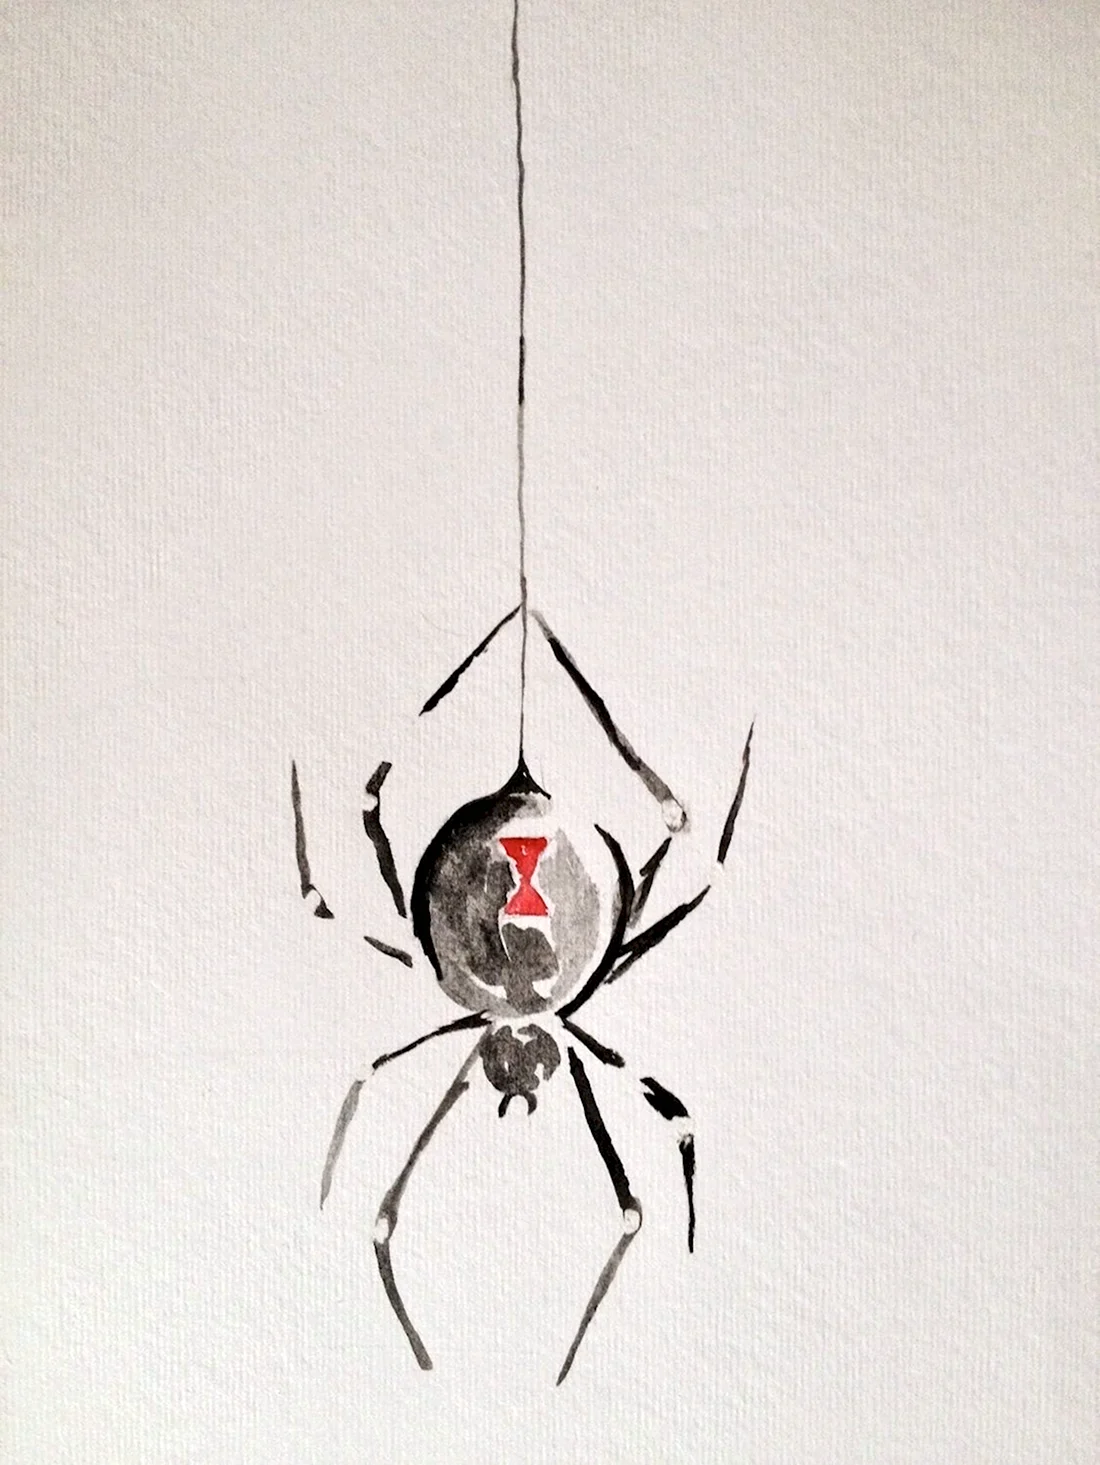 Паук спускается на паутине